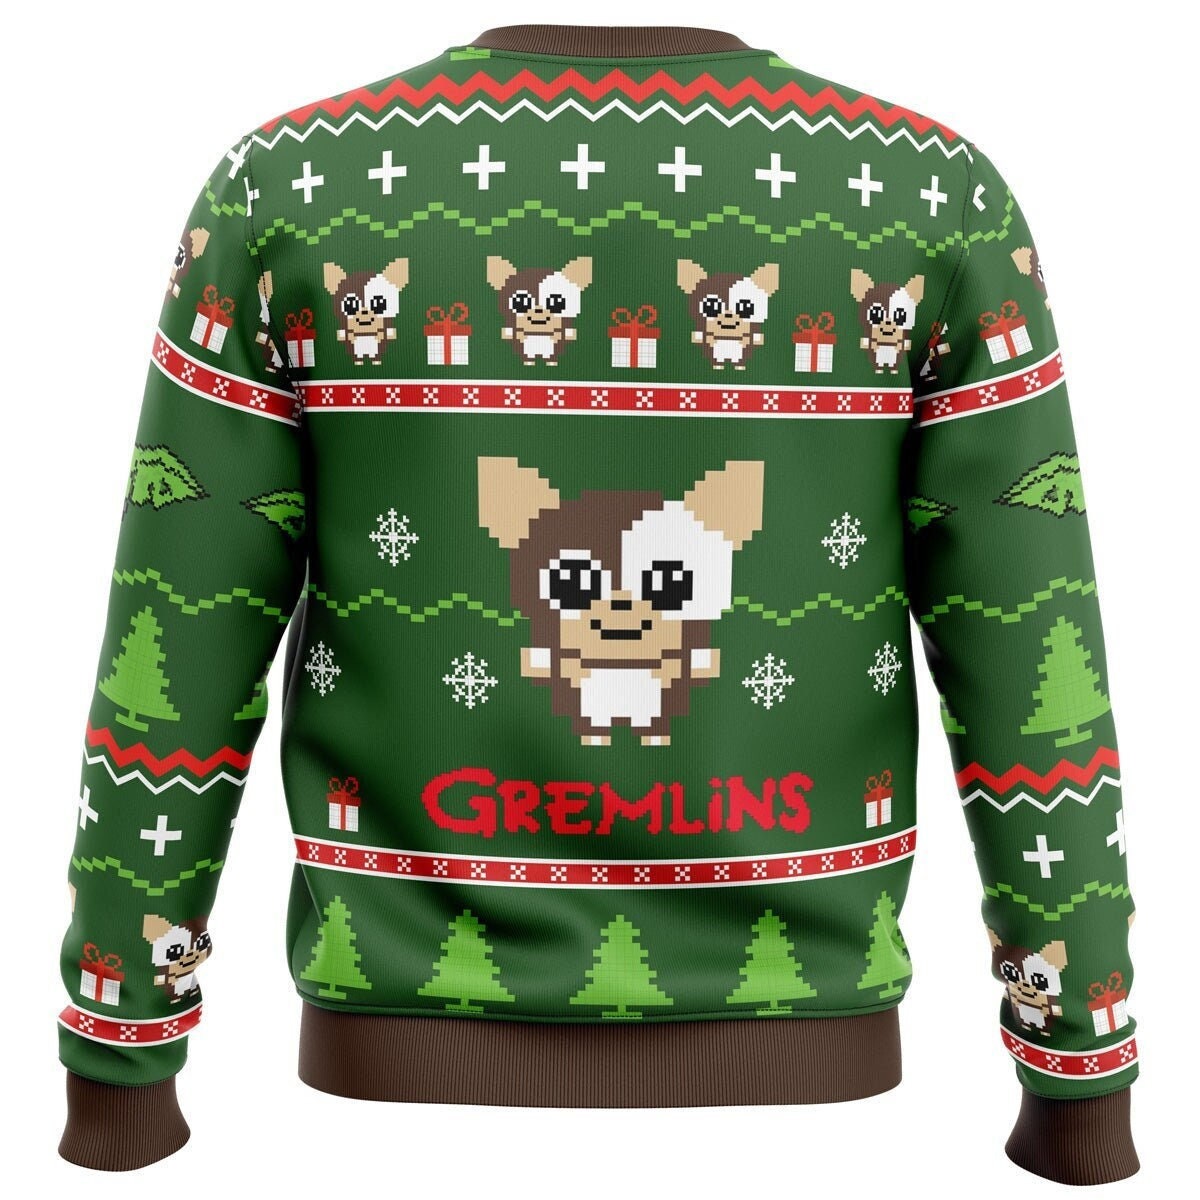 Discover Gremlins Ugly Christmas Sweater, Christmas Gift, Unisex Sweater Gift, Ugly Christmas Sweater, HeavensOriginalStore